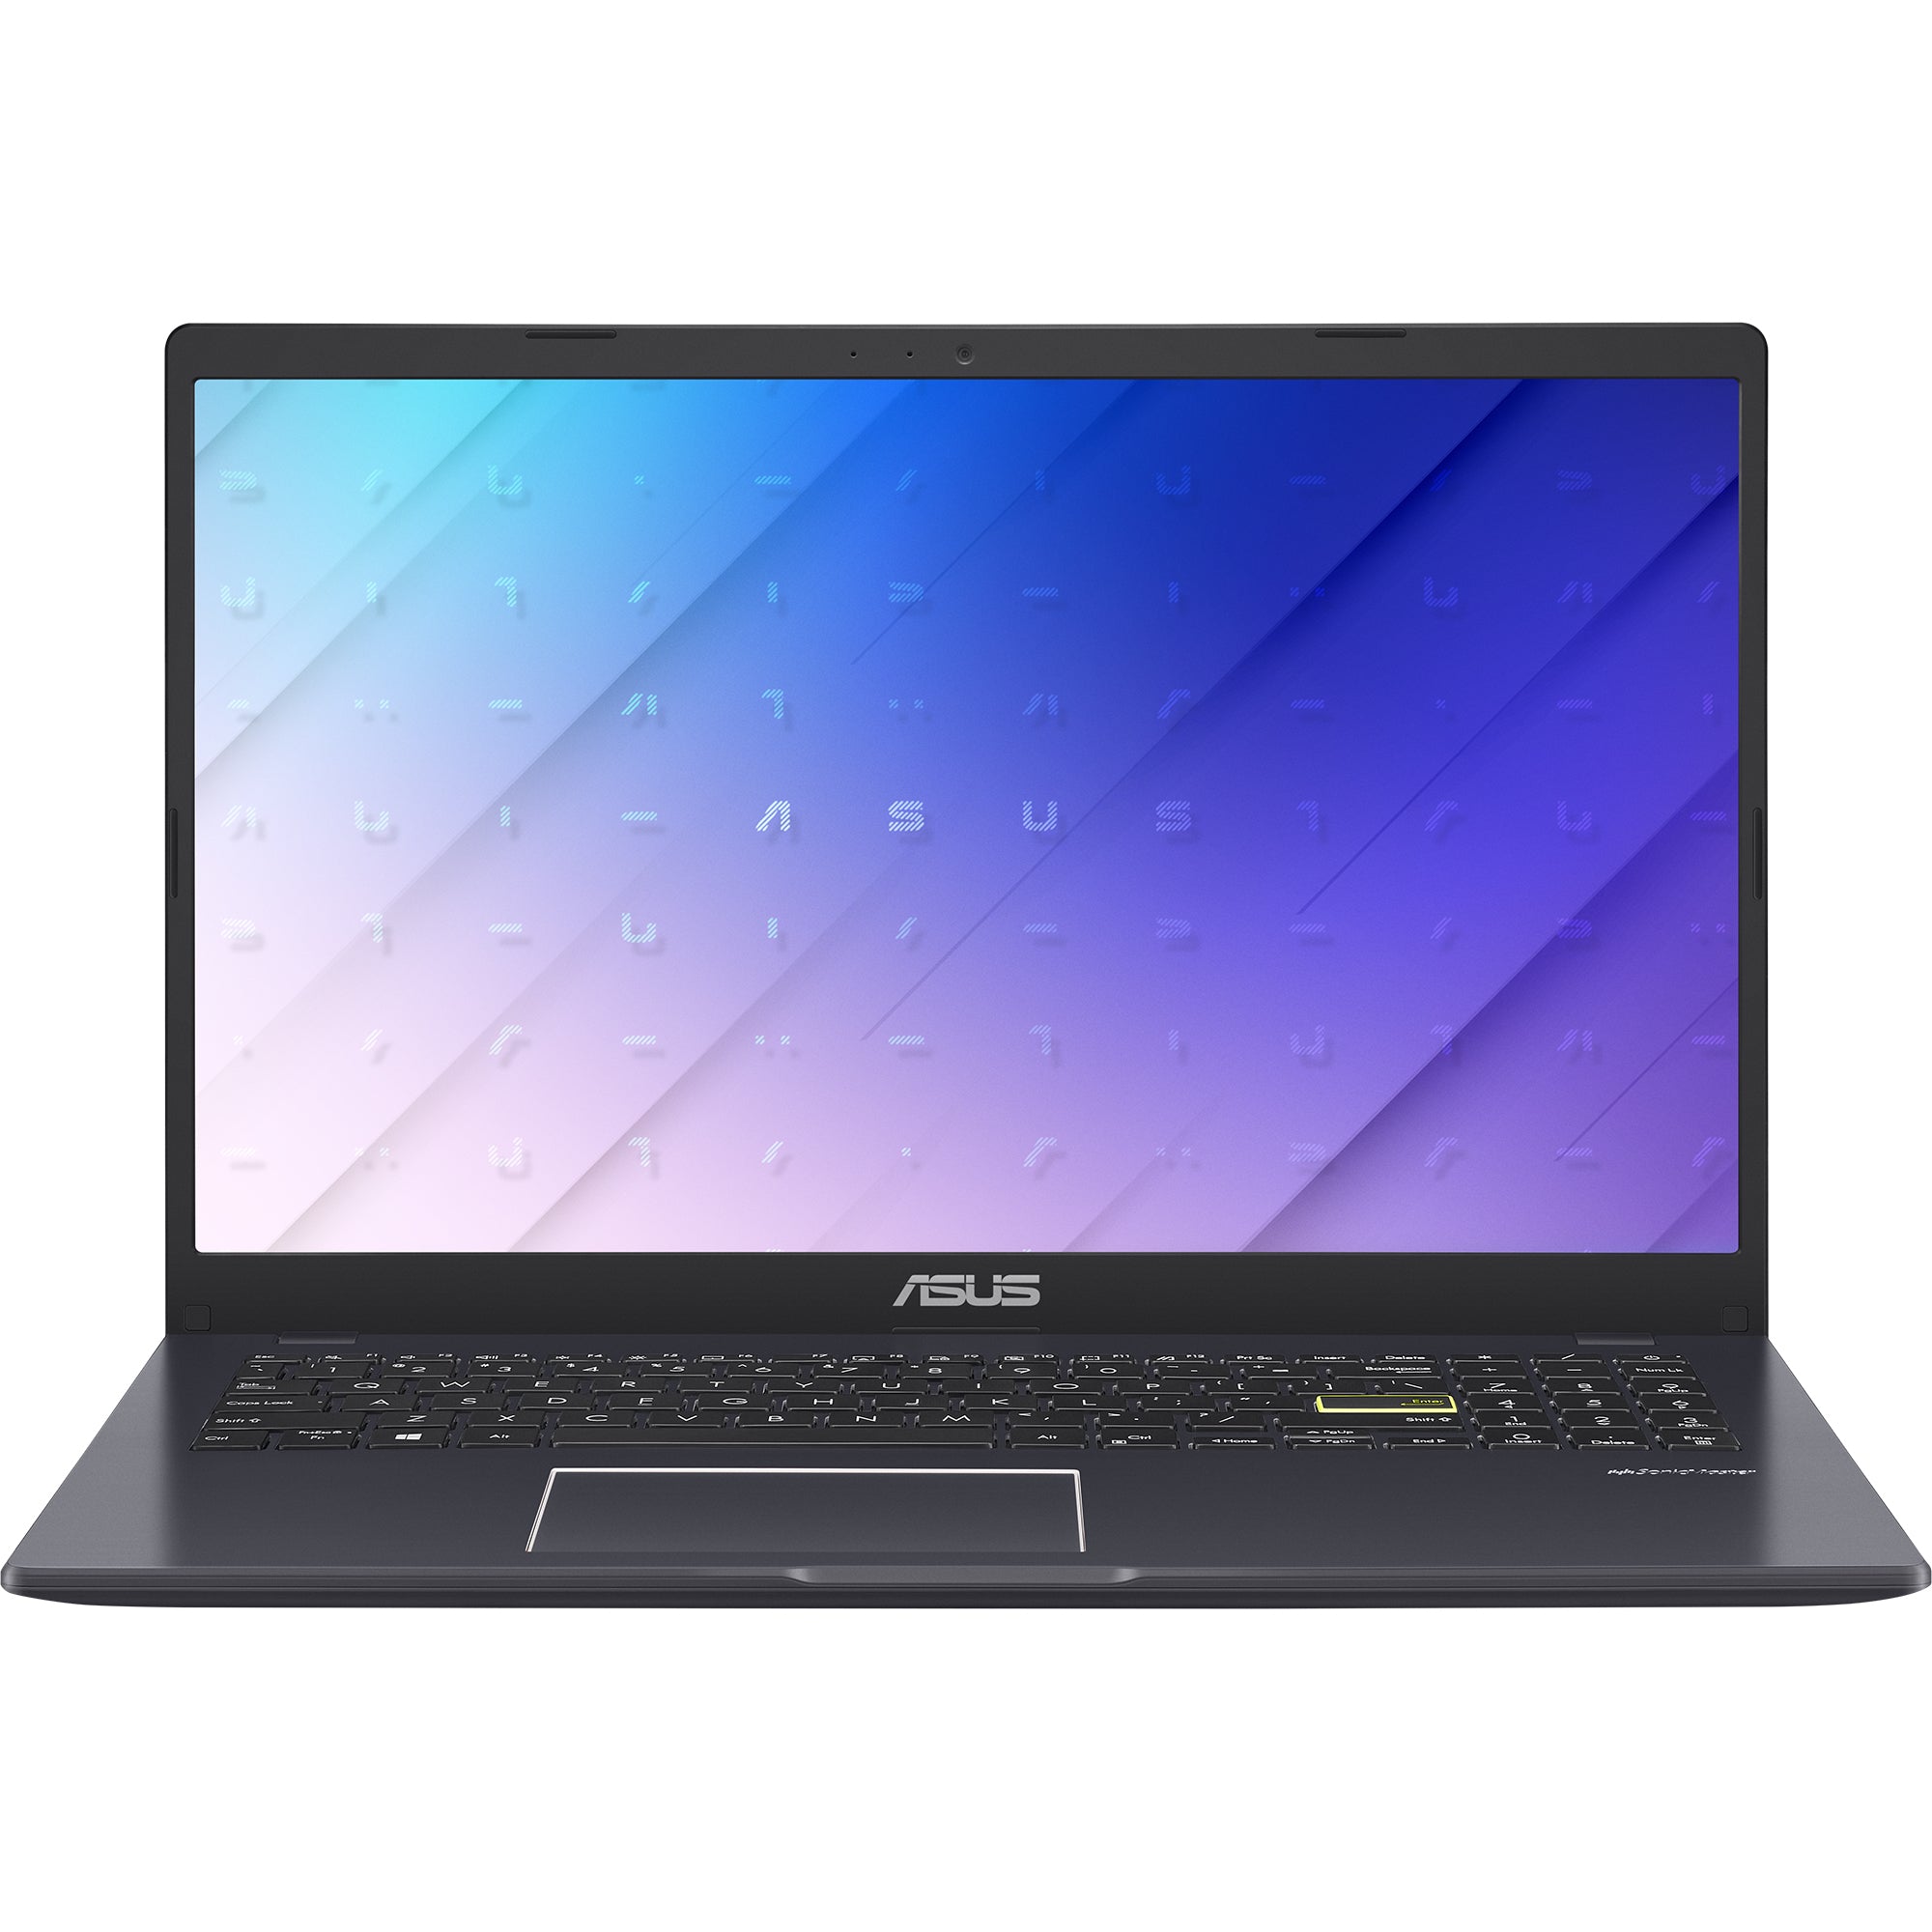 ASUS E510MA-BR887WS Laptop, Intel Celeron N4020, 4GB RAM, 64GB eMMC, 15.6", Peacock Blue